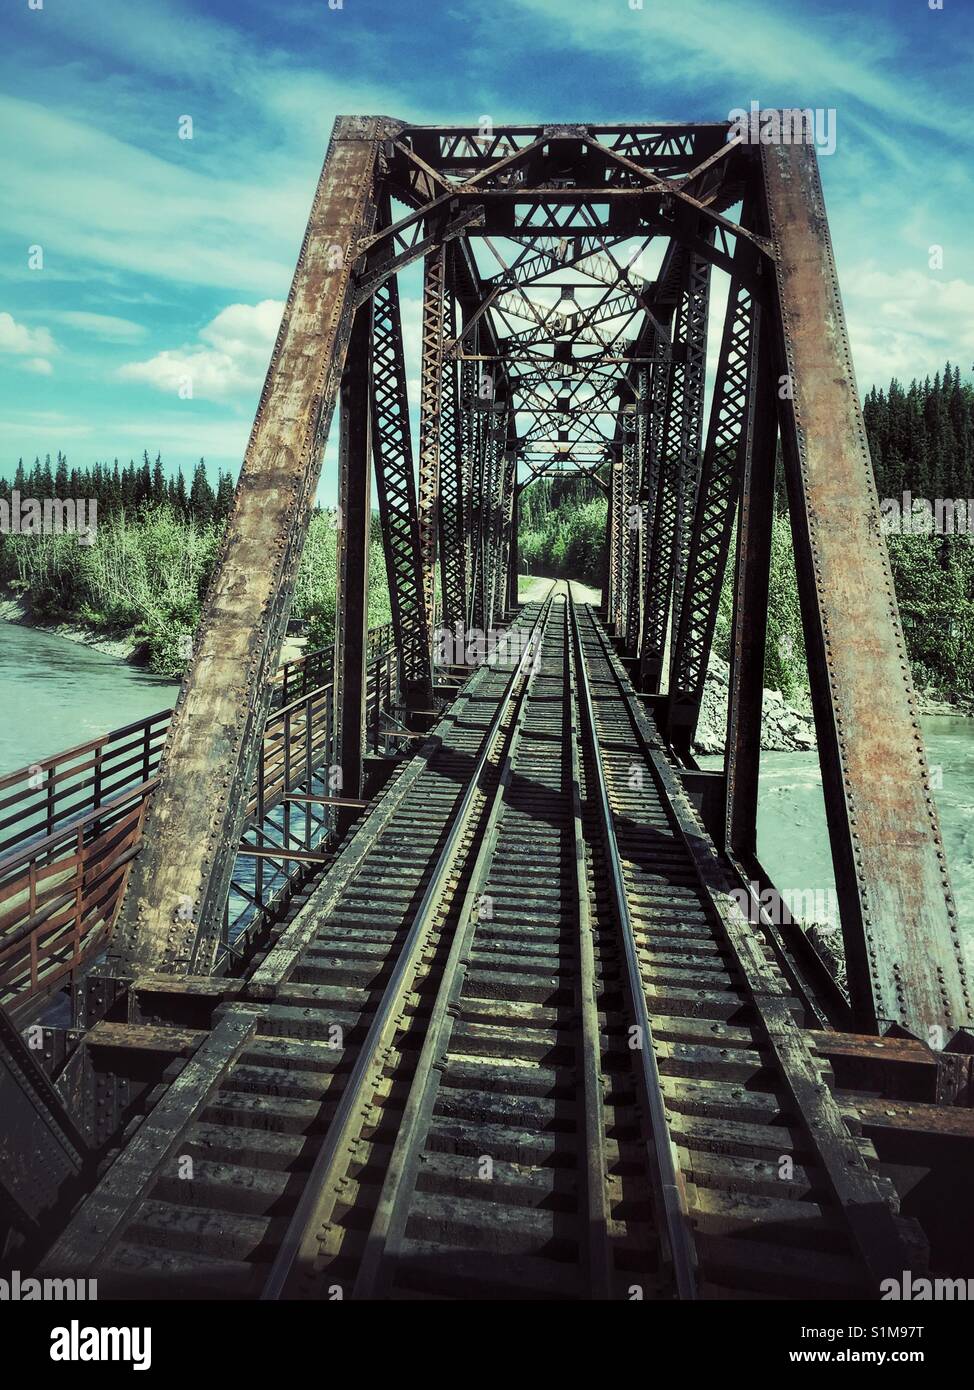 Train tracks leading across metal railway bridge to trees on distance shore. Steel railway bridge between Fairbanks and Denali, Alaska Stock Photo